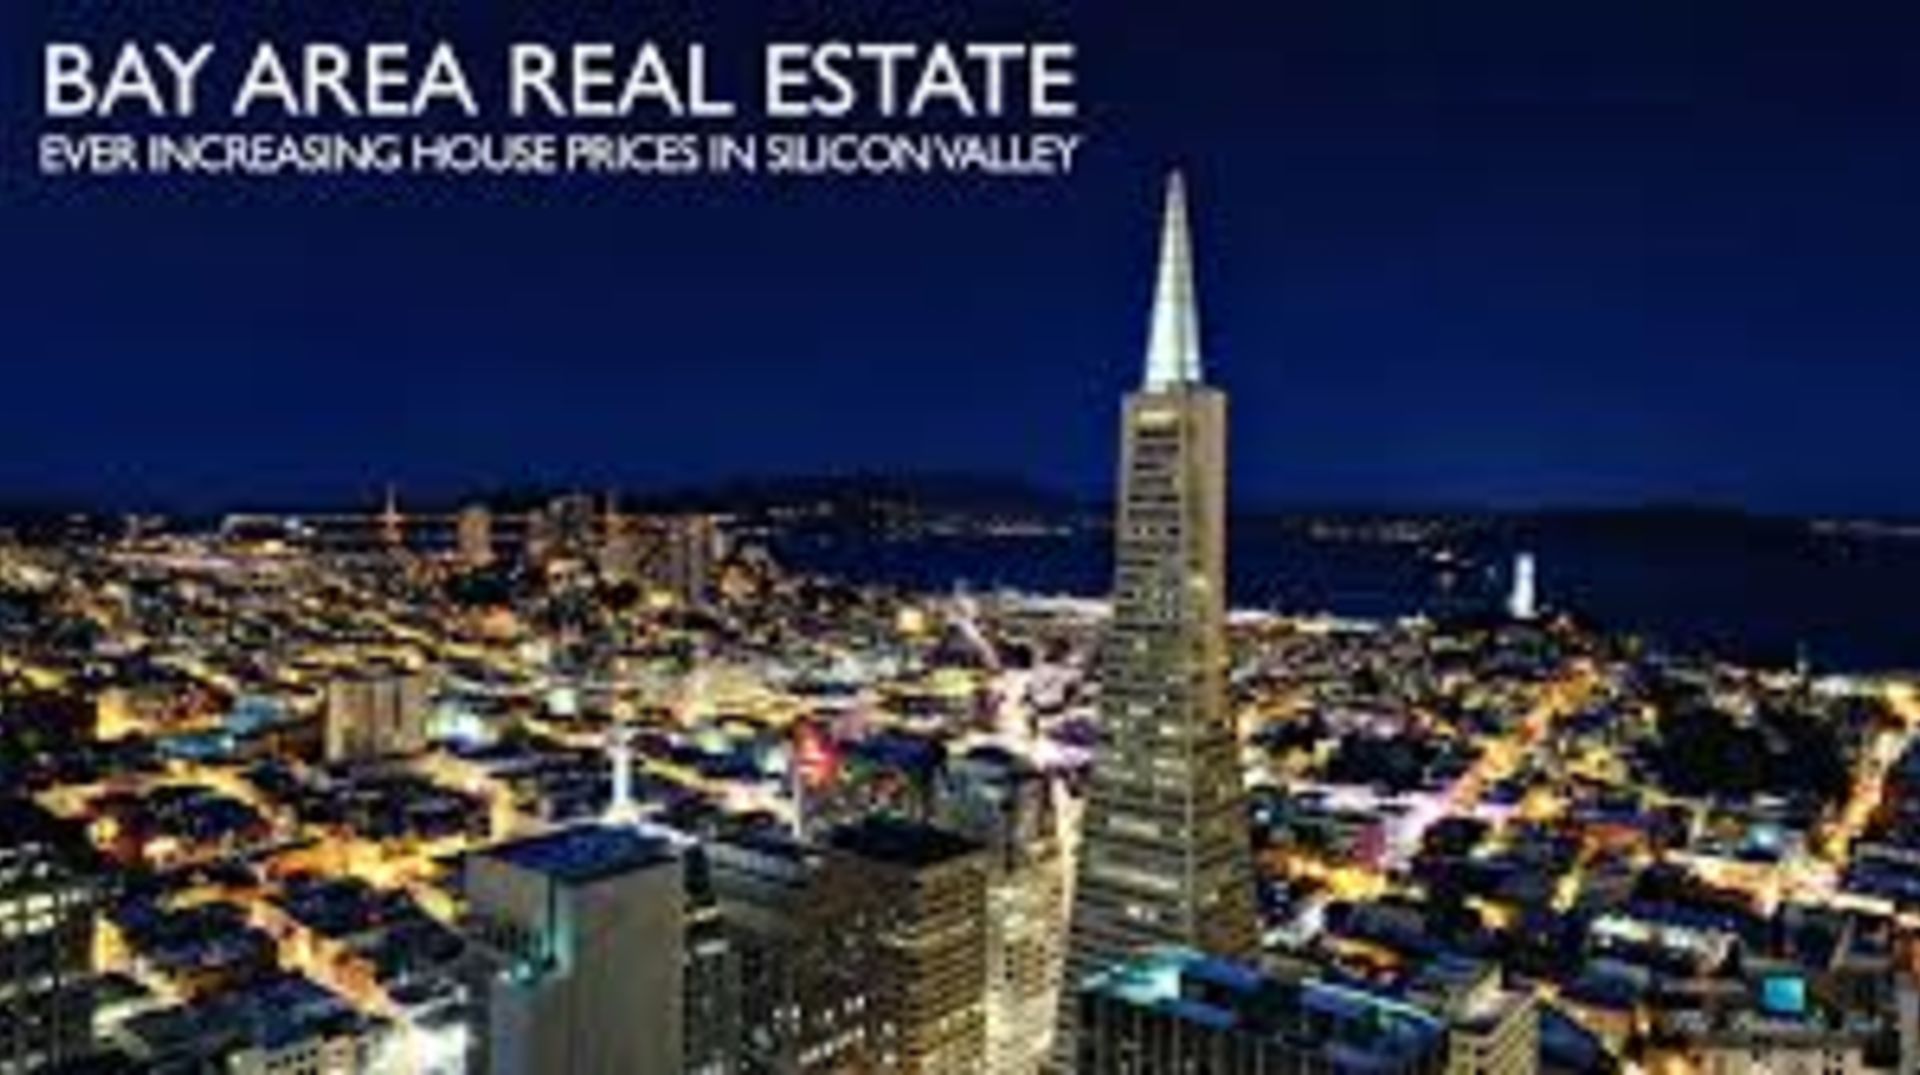 Bay Area real estate still a good buy